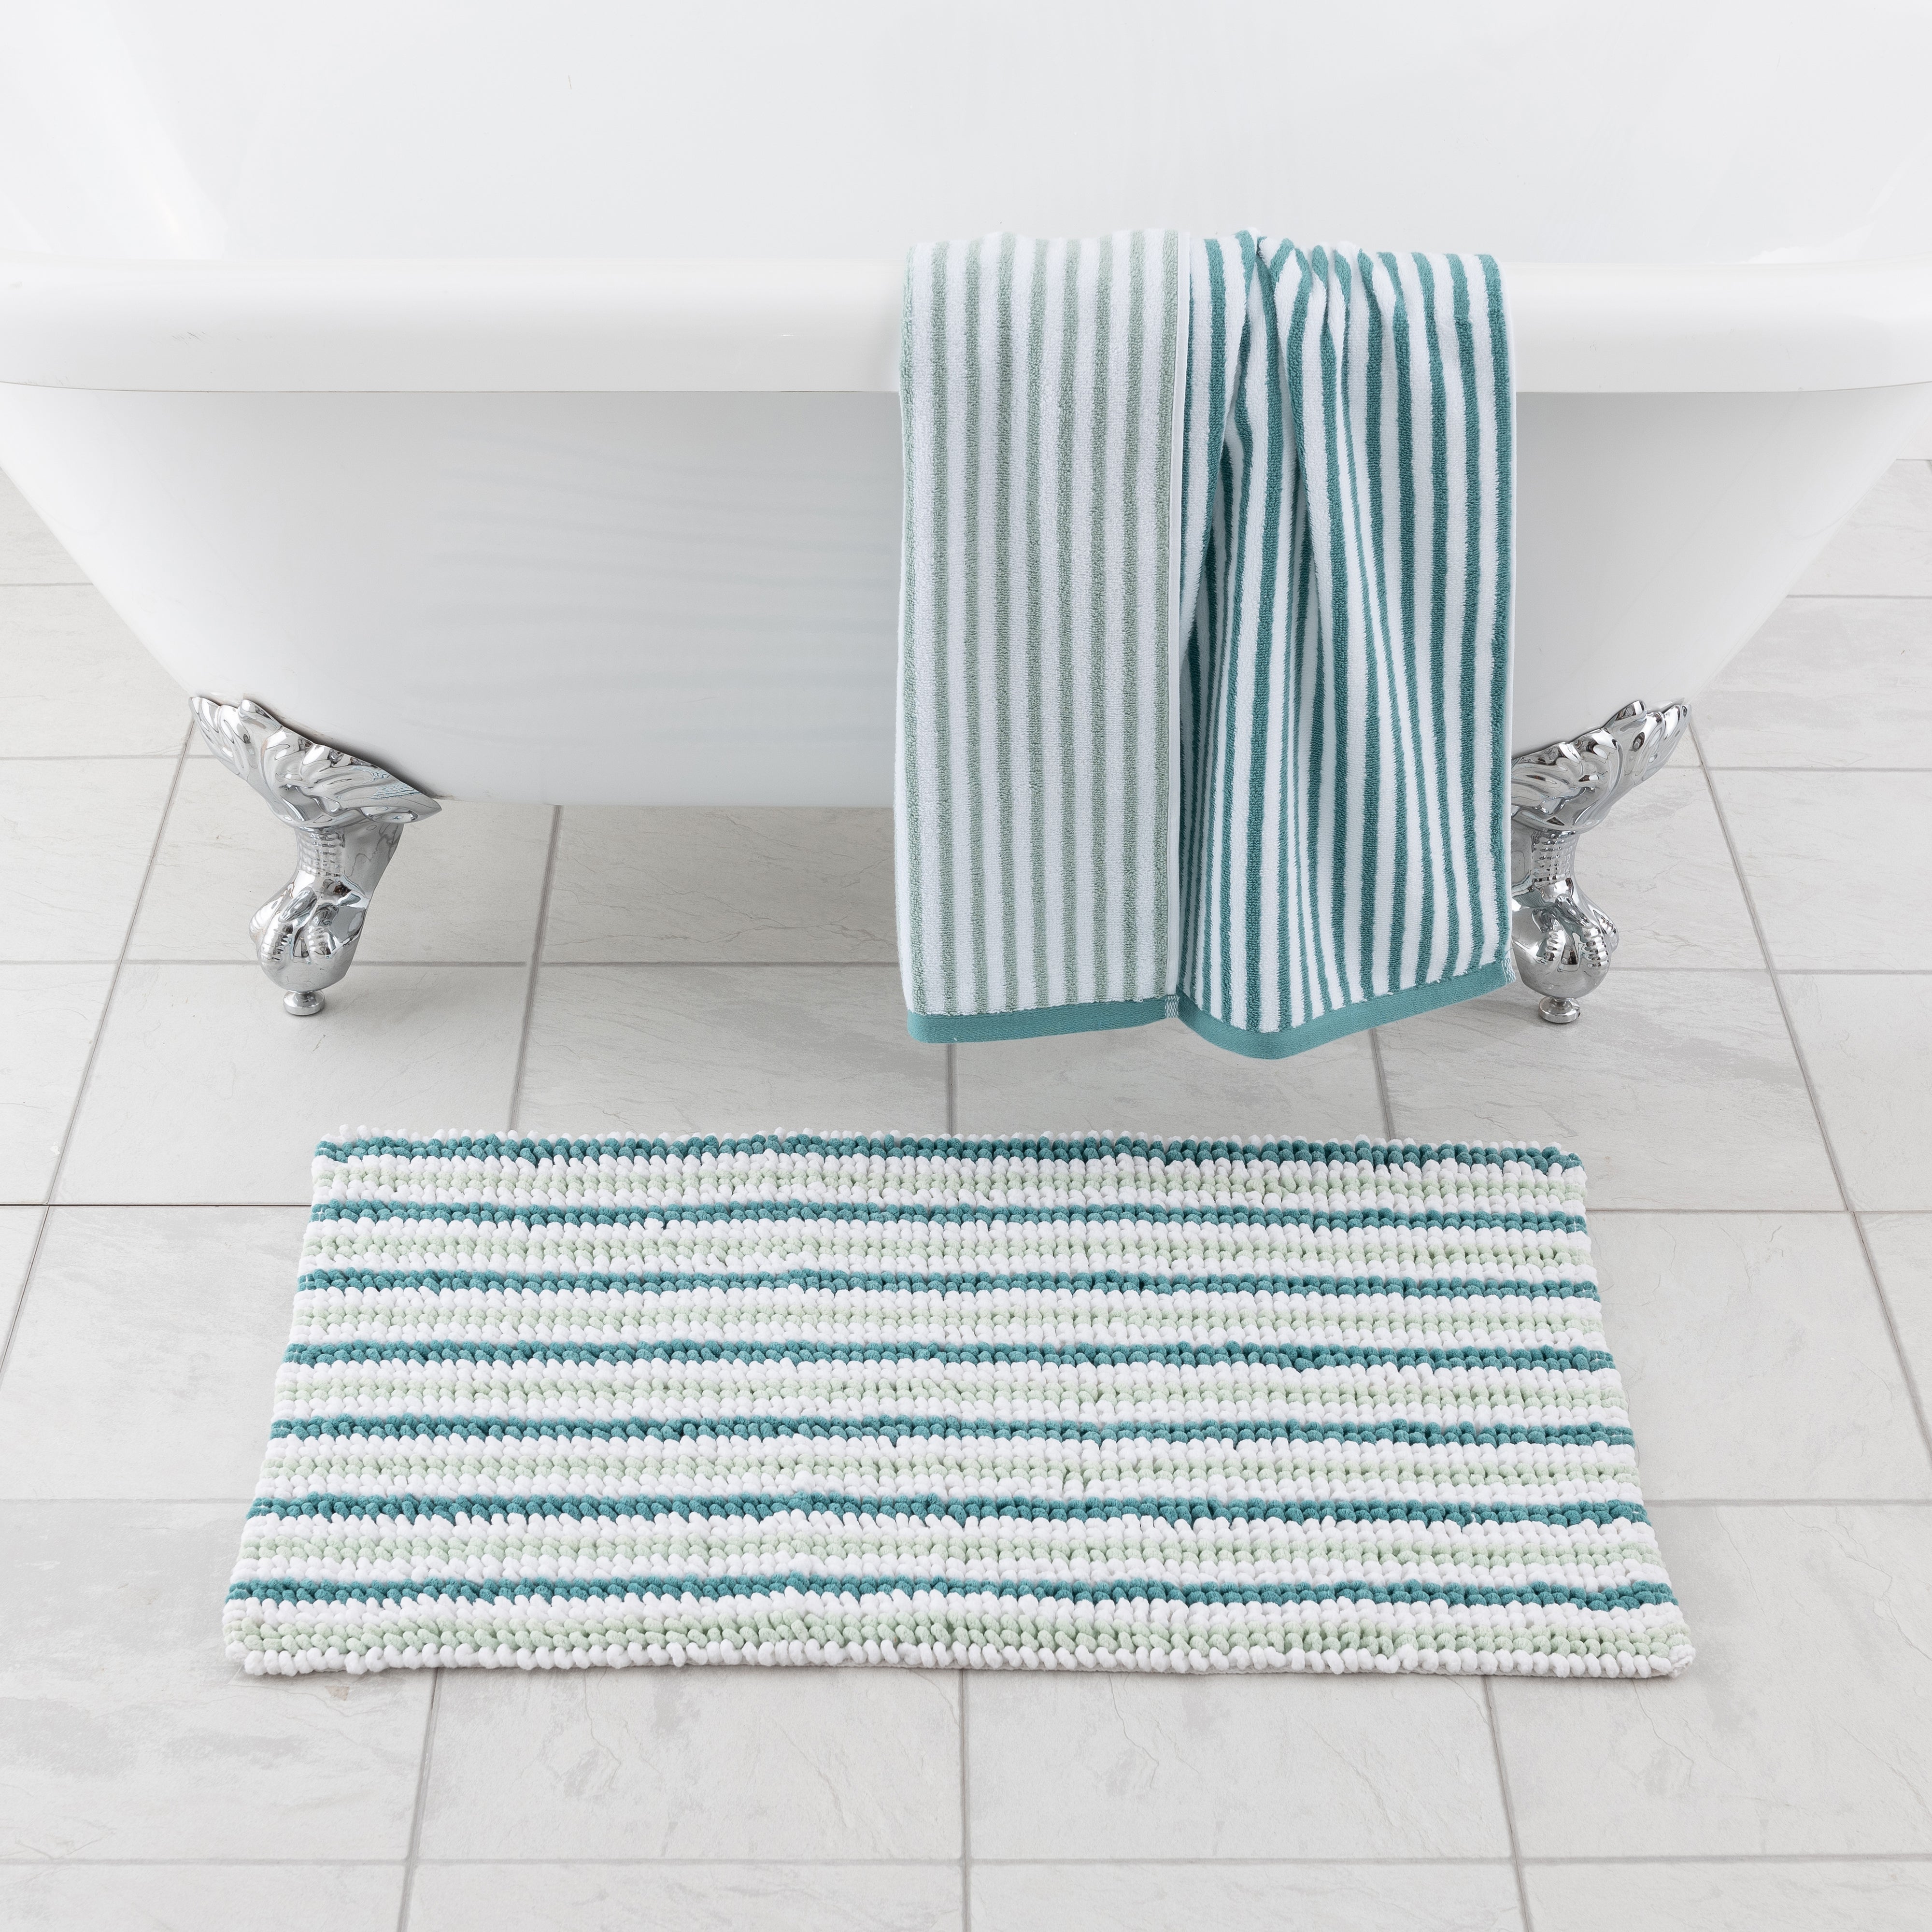 Aqua Stripes Bath Mat, Blue Bathroom Decor, Striped Bathroom Decor